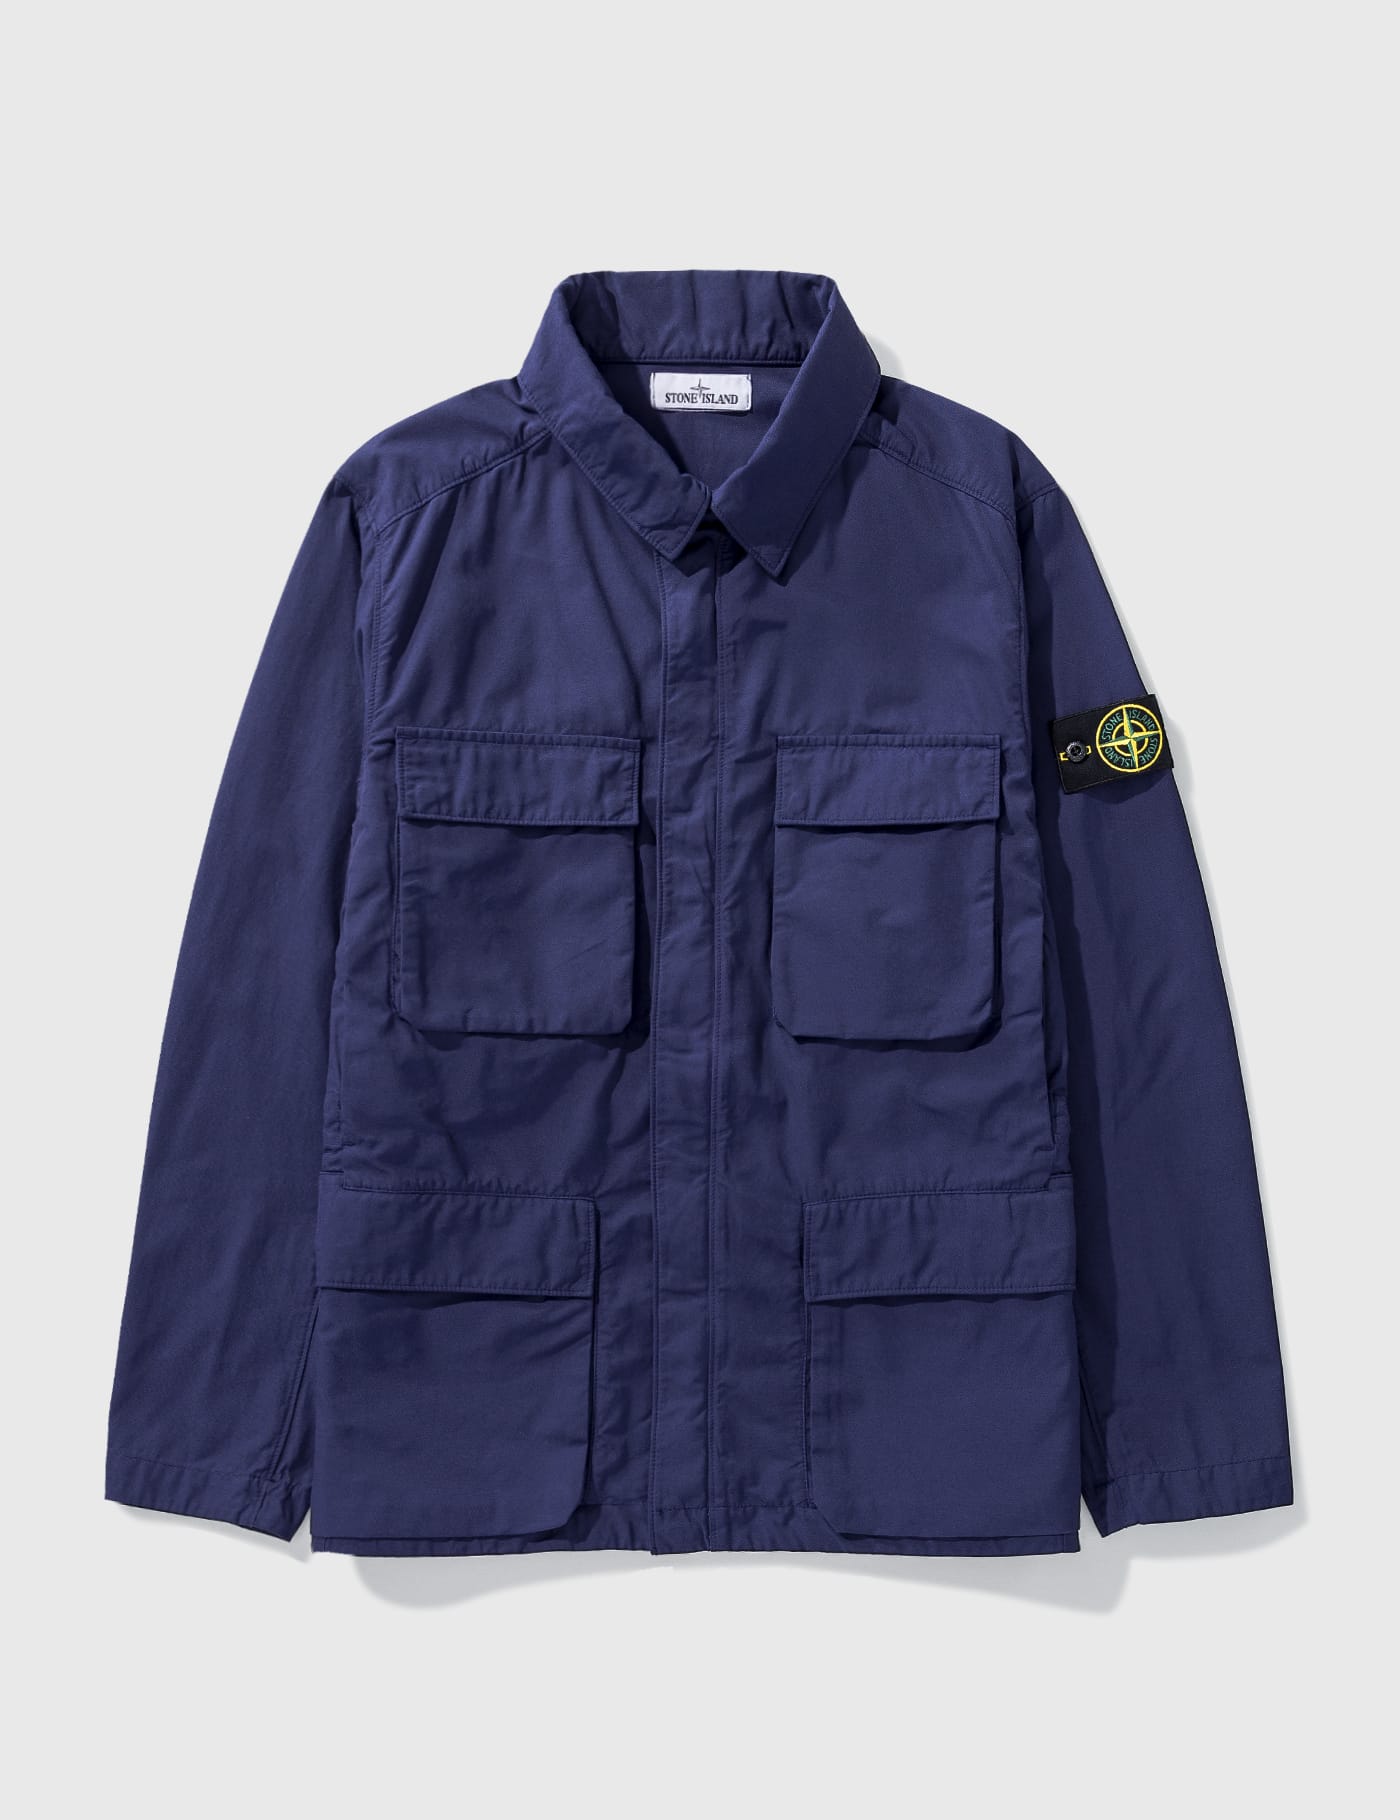 Stone Island - Garment Dyed Nylon Batavia Field Jacket | HBX - Globally  Curated Fashion and Lifestyle by Hypebeast